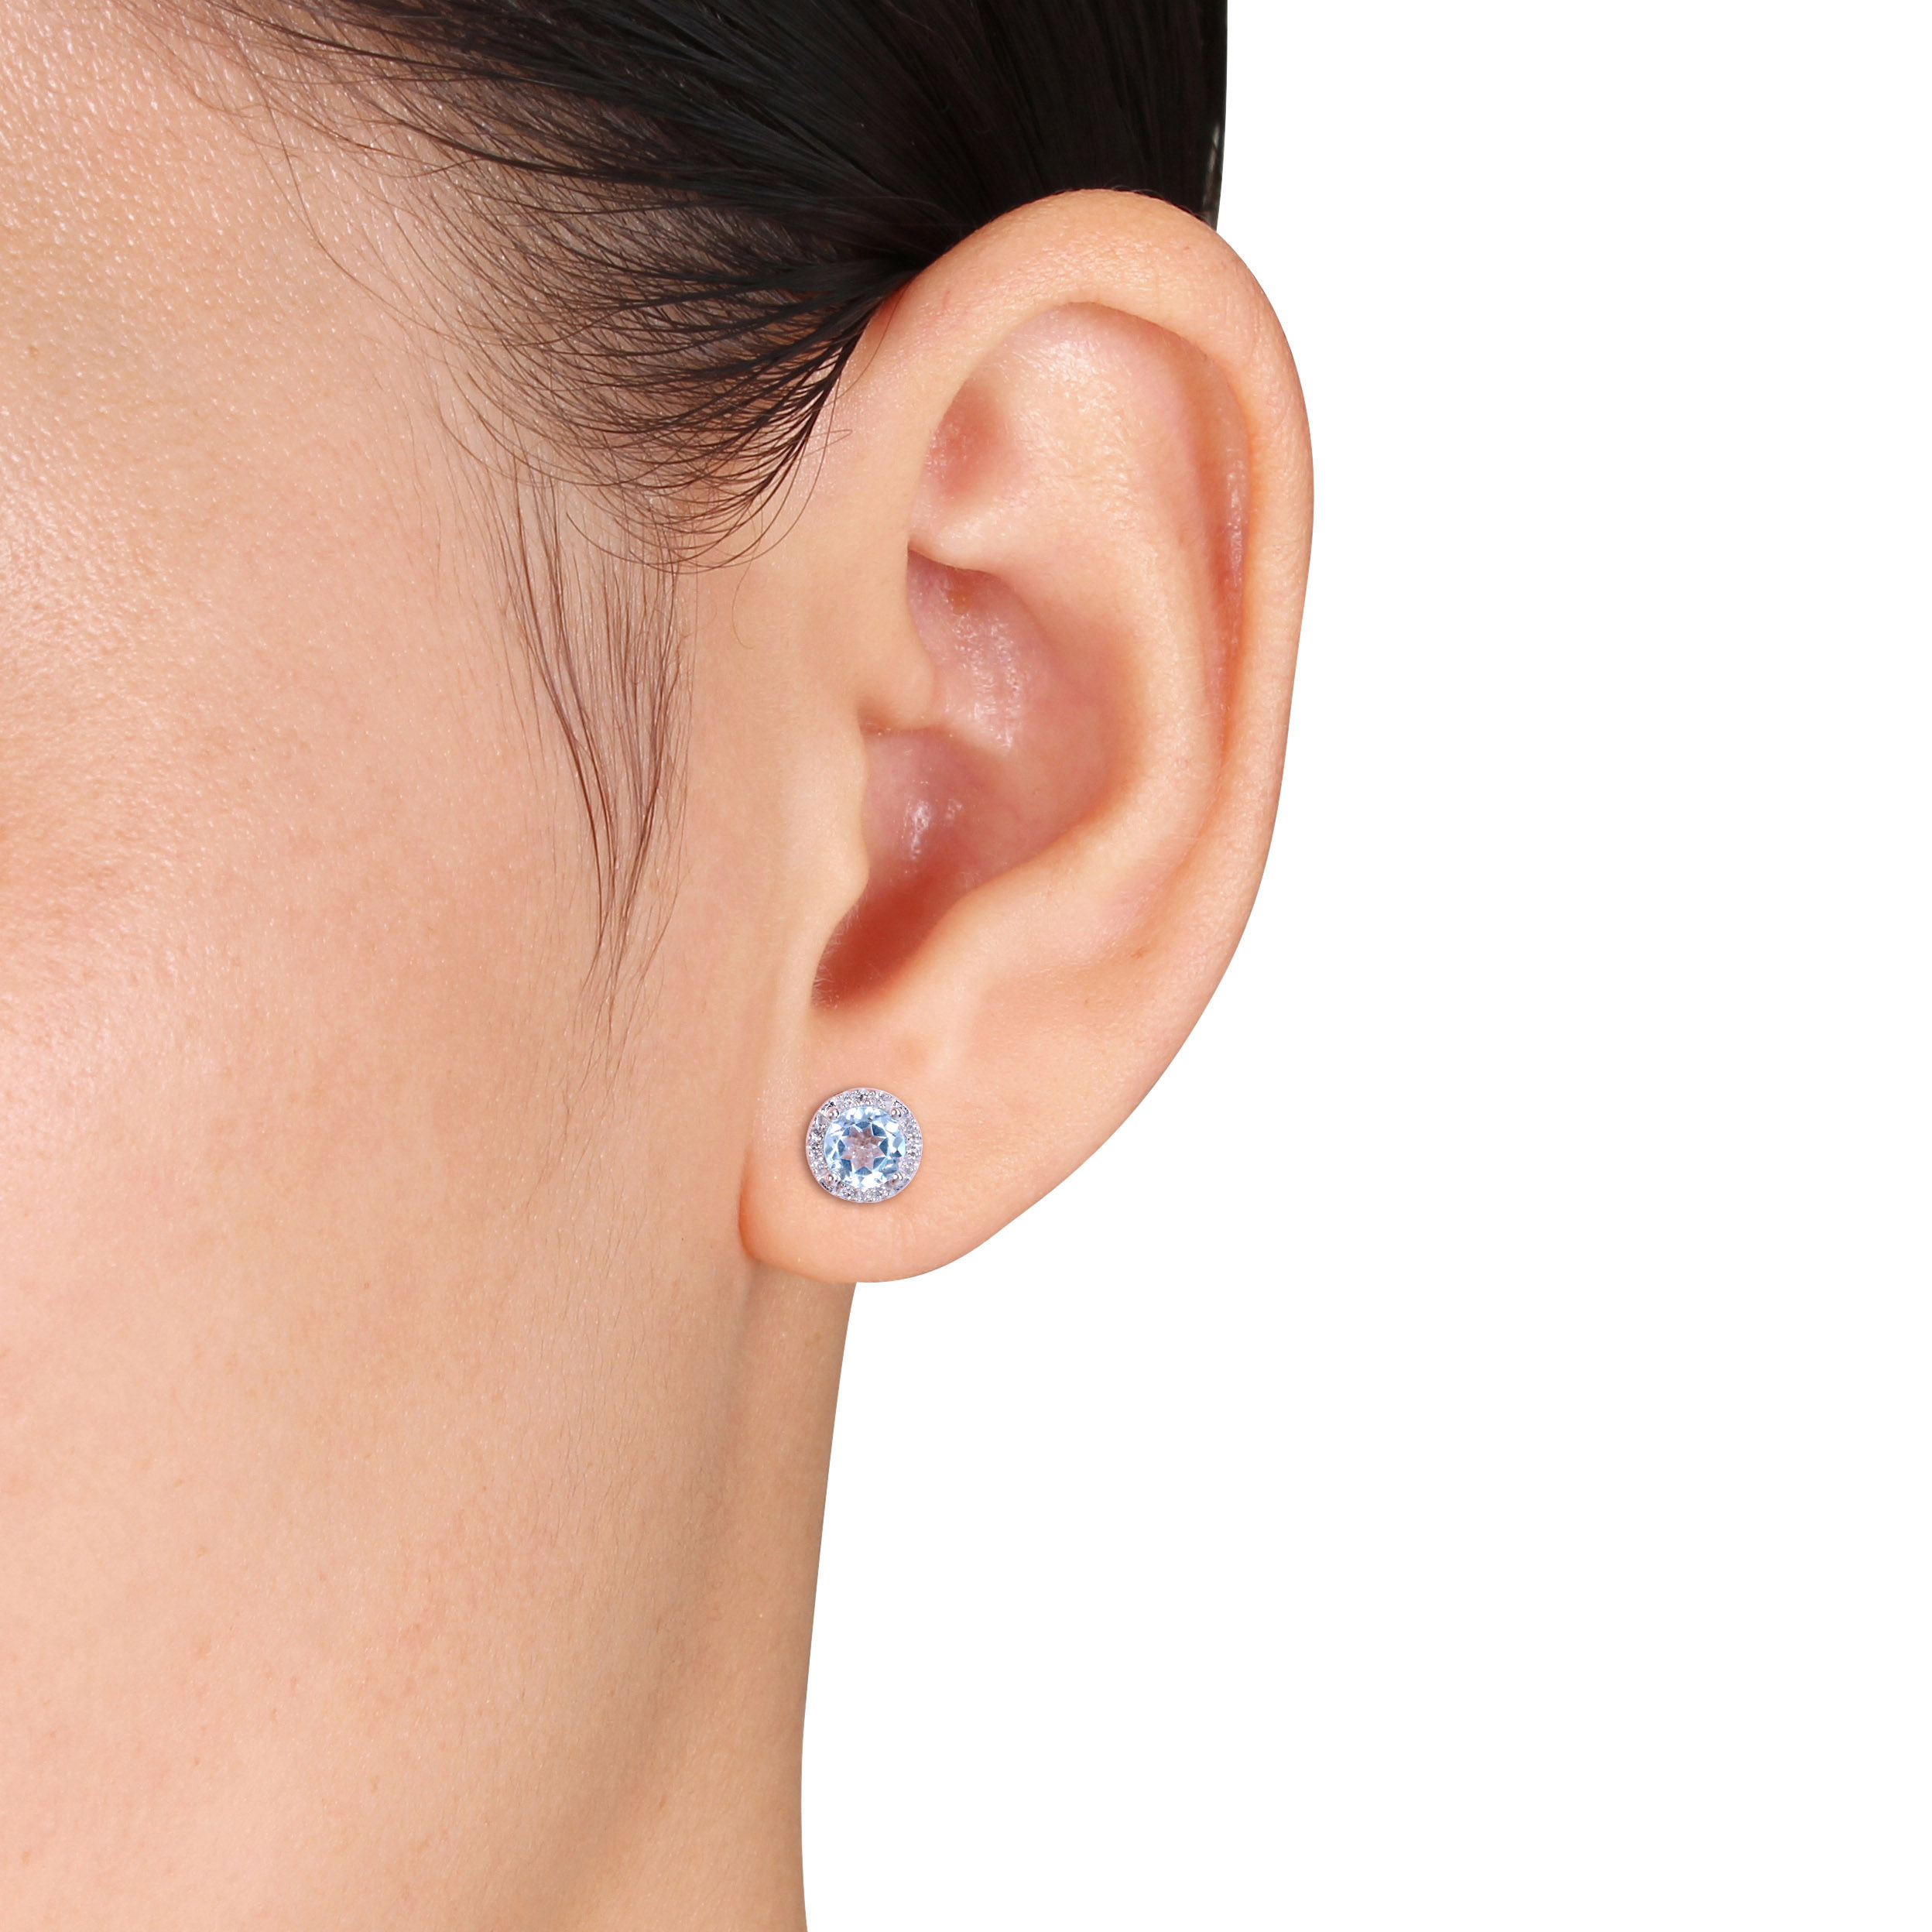 Sky-Blue Topaz Halo Earrings with Diamonds in 10k White Gold